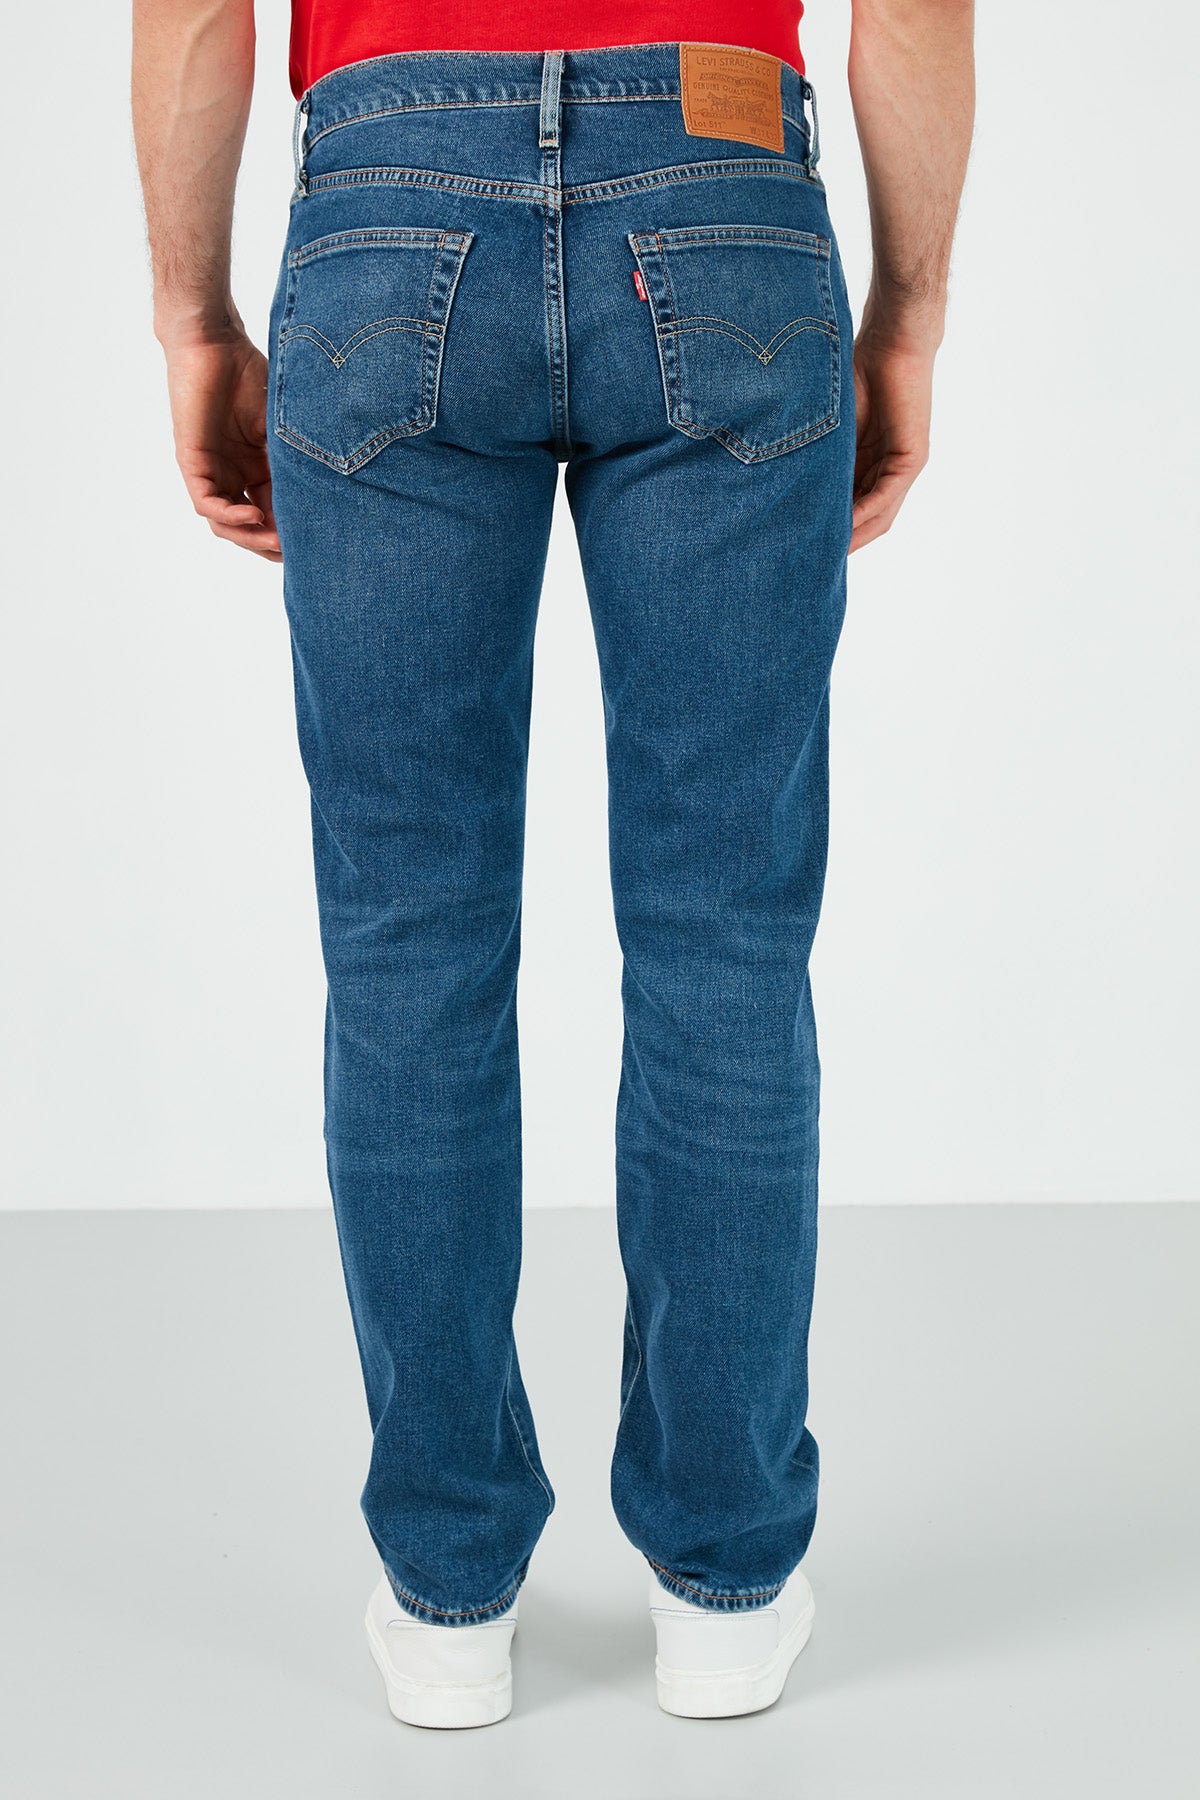 ליוויס ג'ינס ארוך 511 בגזרת סלים